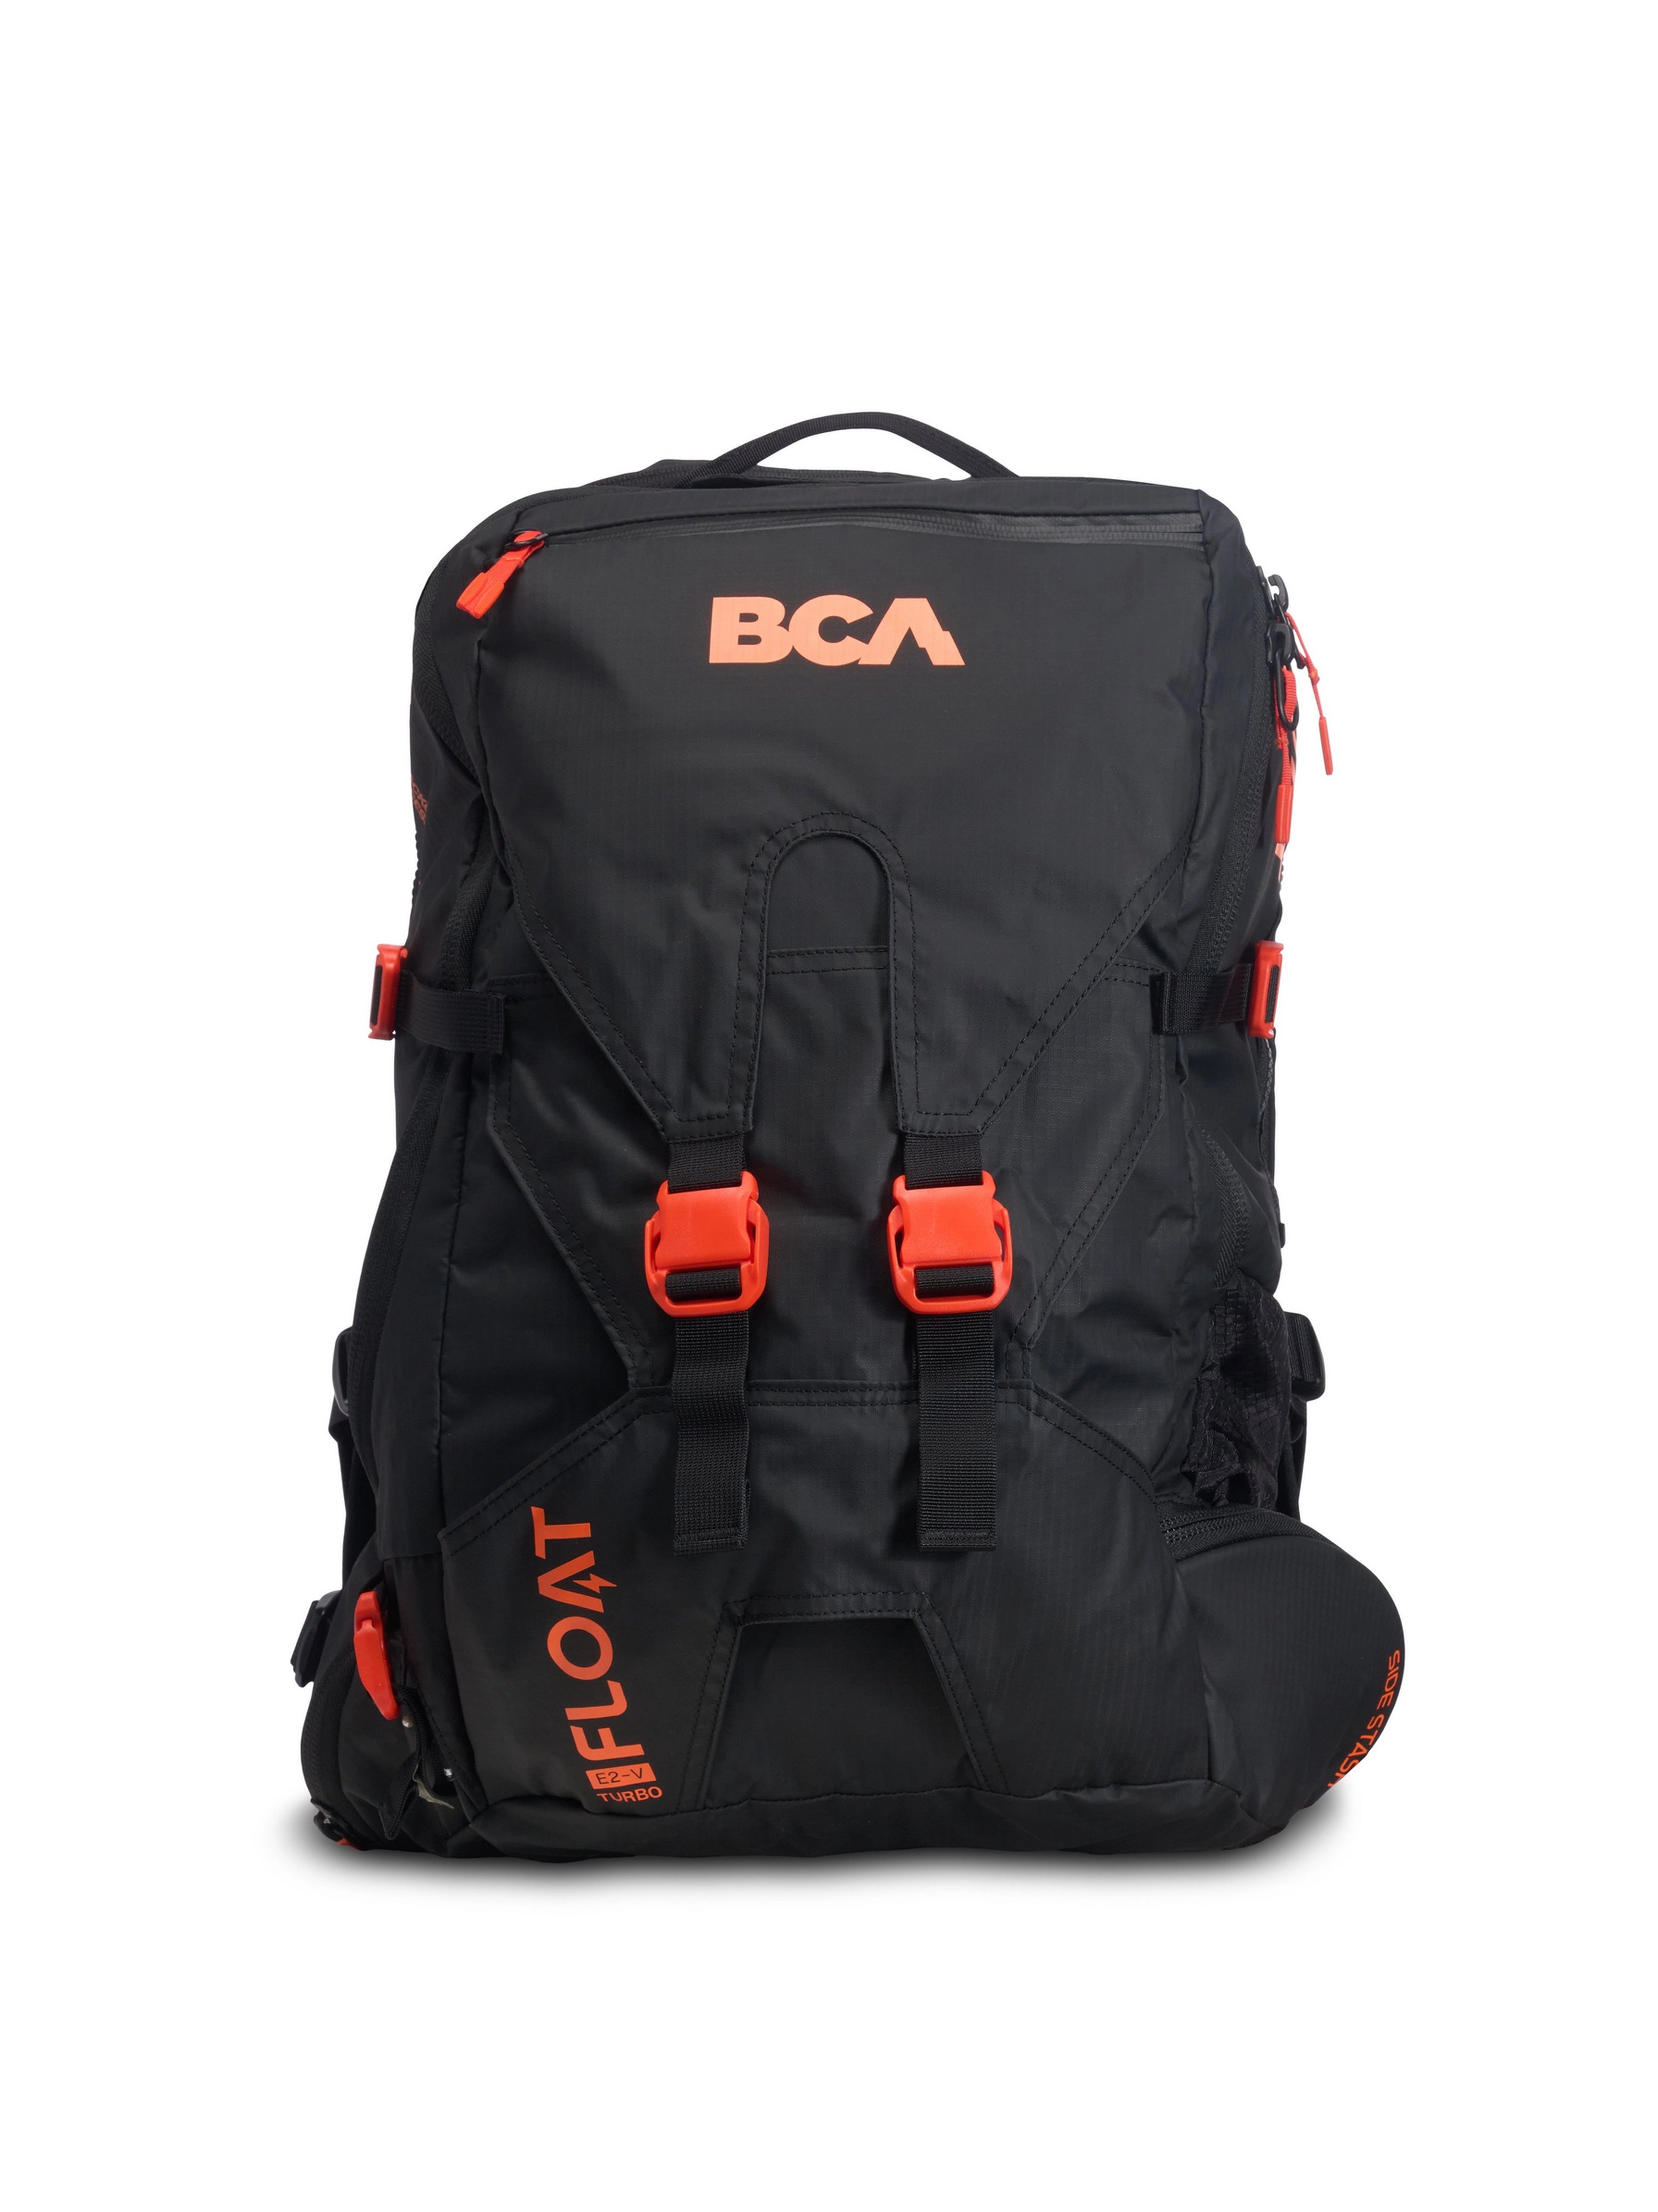 BCA Float E2 MtnPro Vest Avalanche Airbag